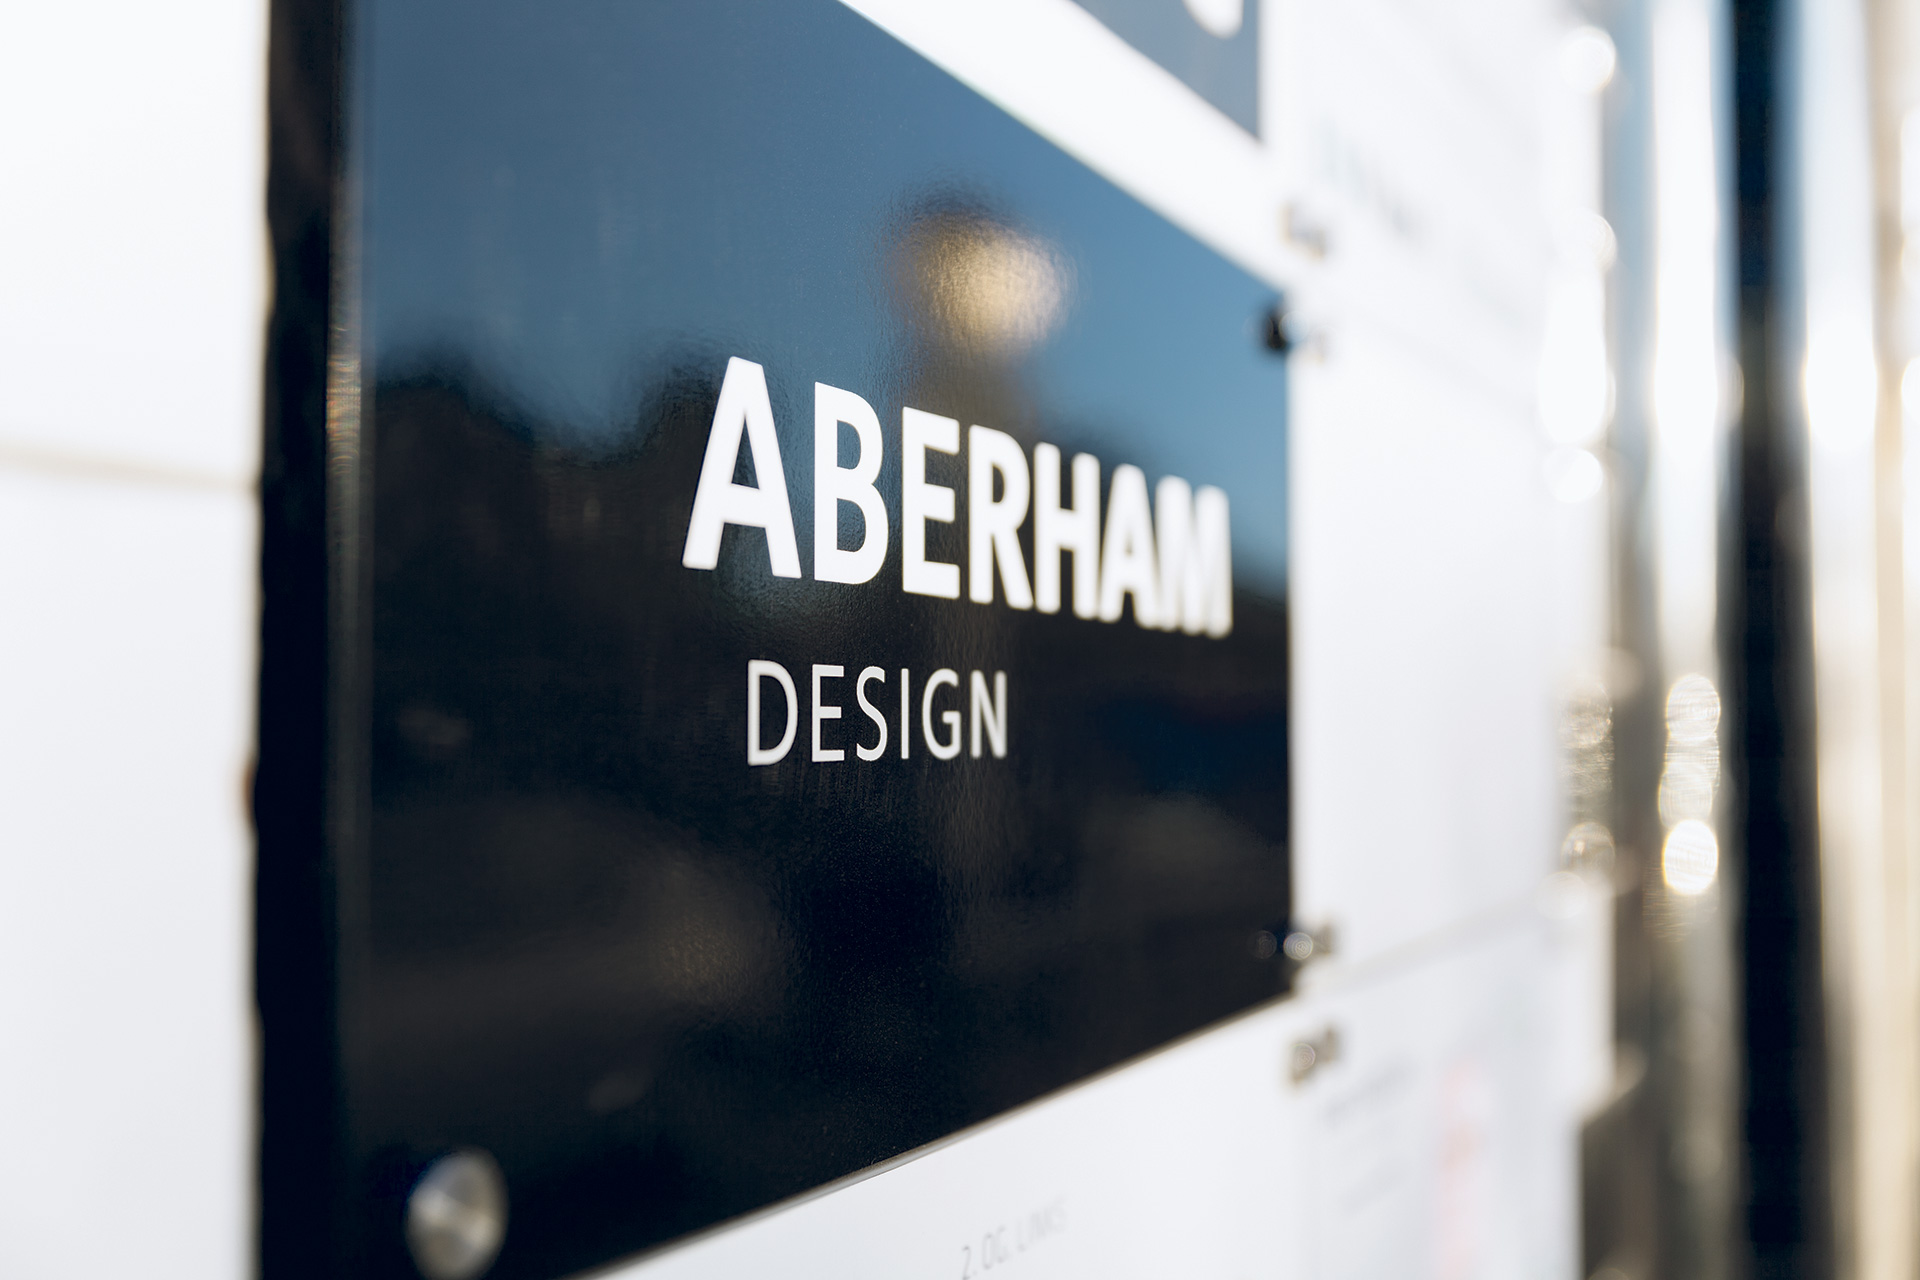 ABERHAM Communication Design